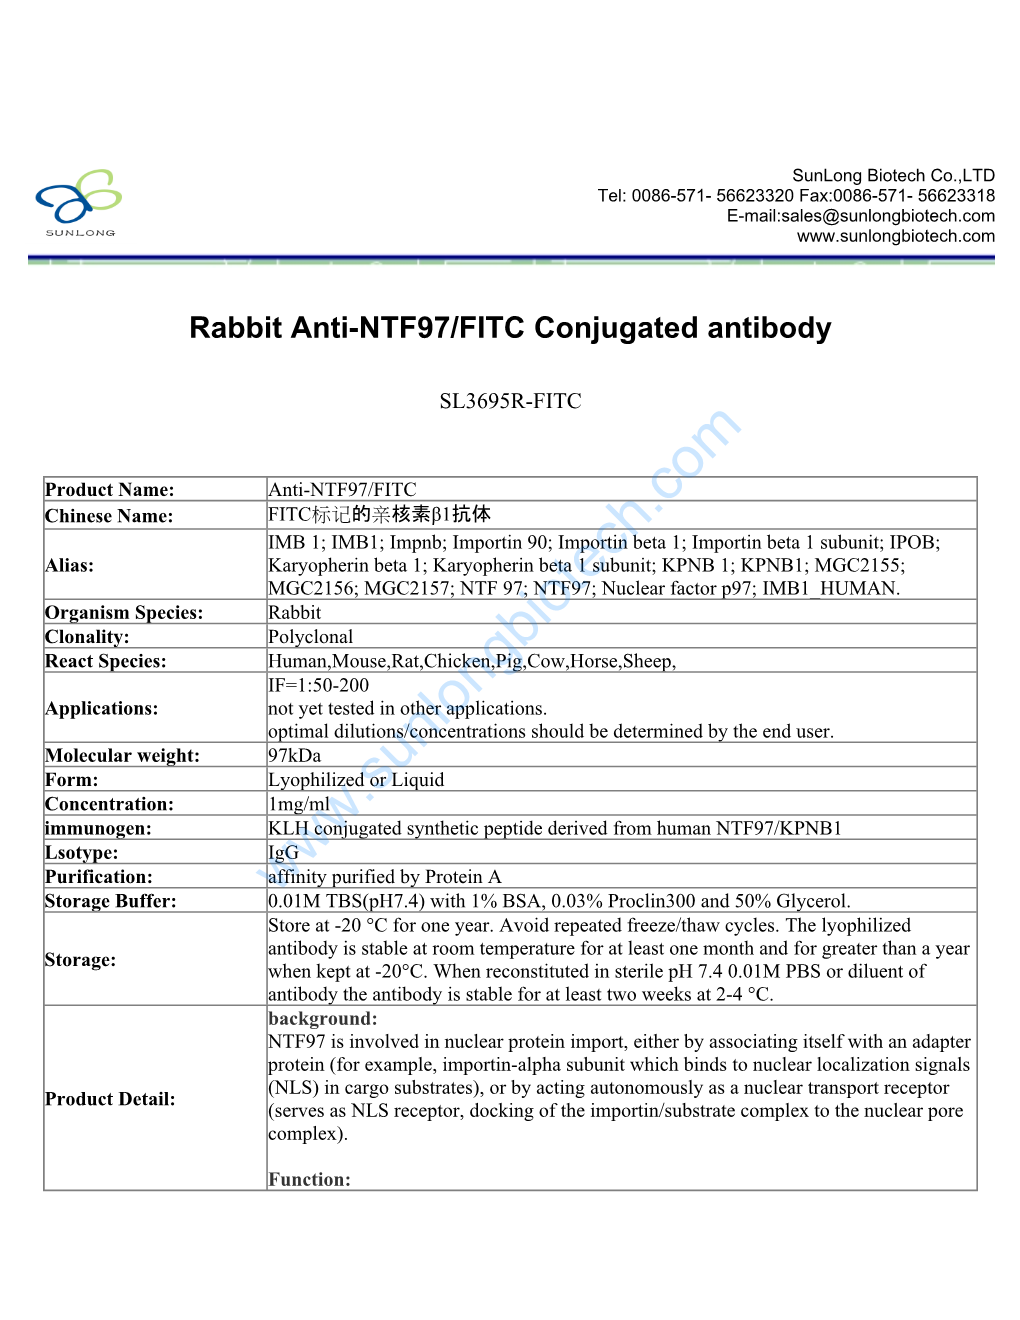 Rabbit Anti-NTF97/FITC Conjugated Antibody